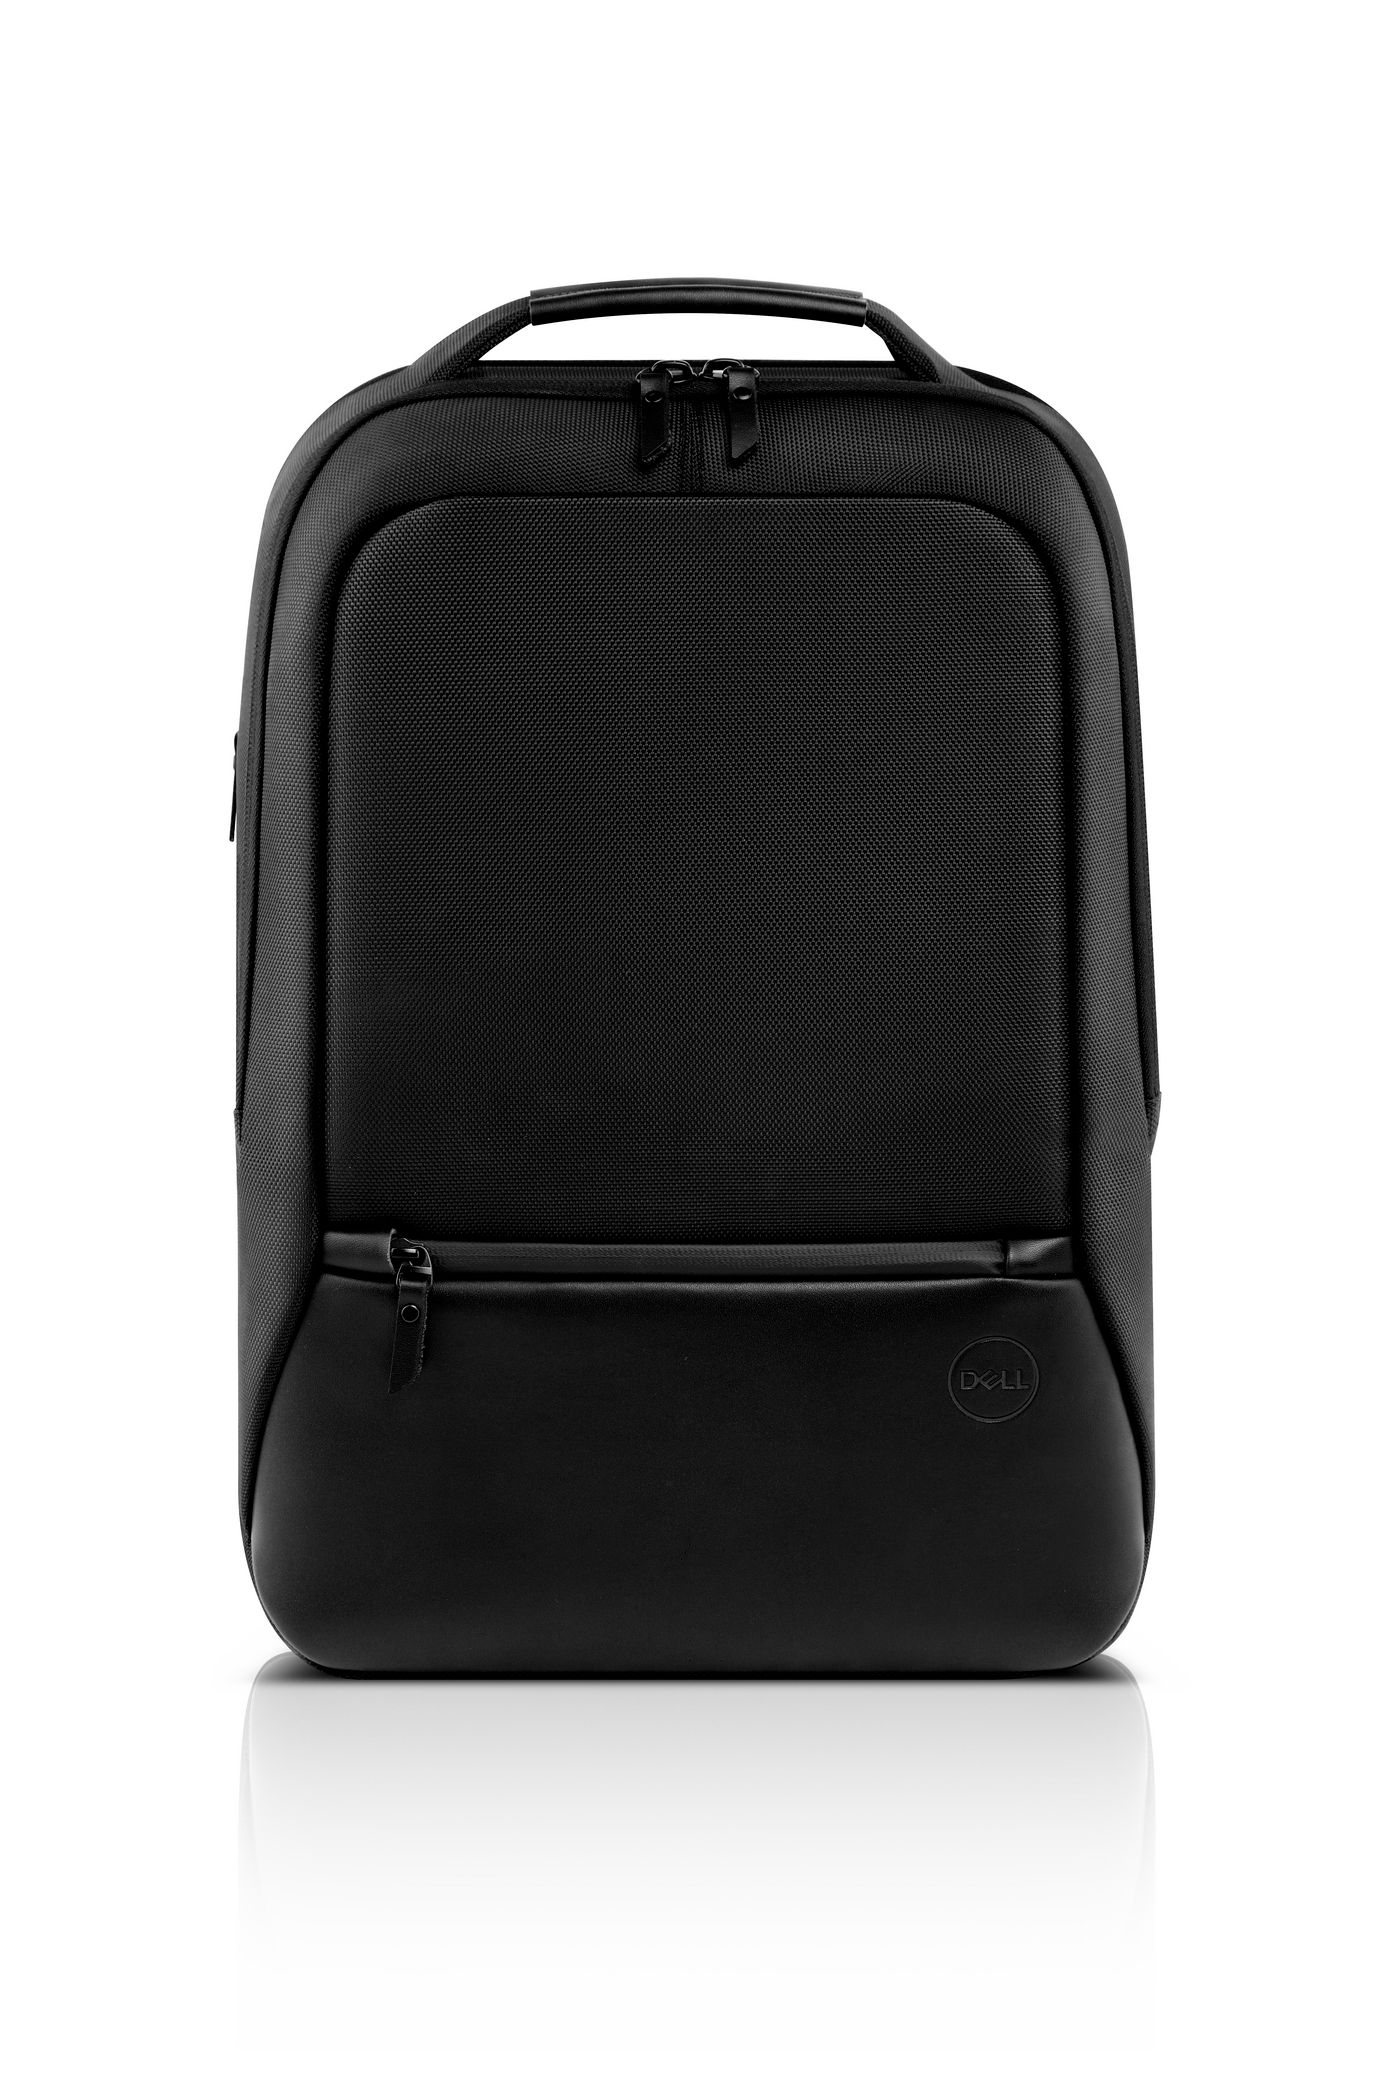 Dell 460-BCQM W127153765 Premier Slim Backpack 15 